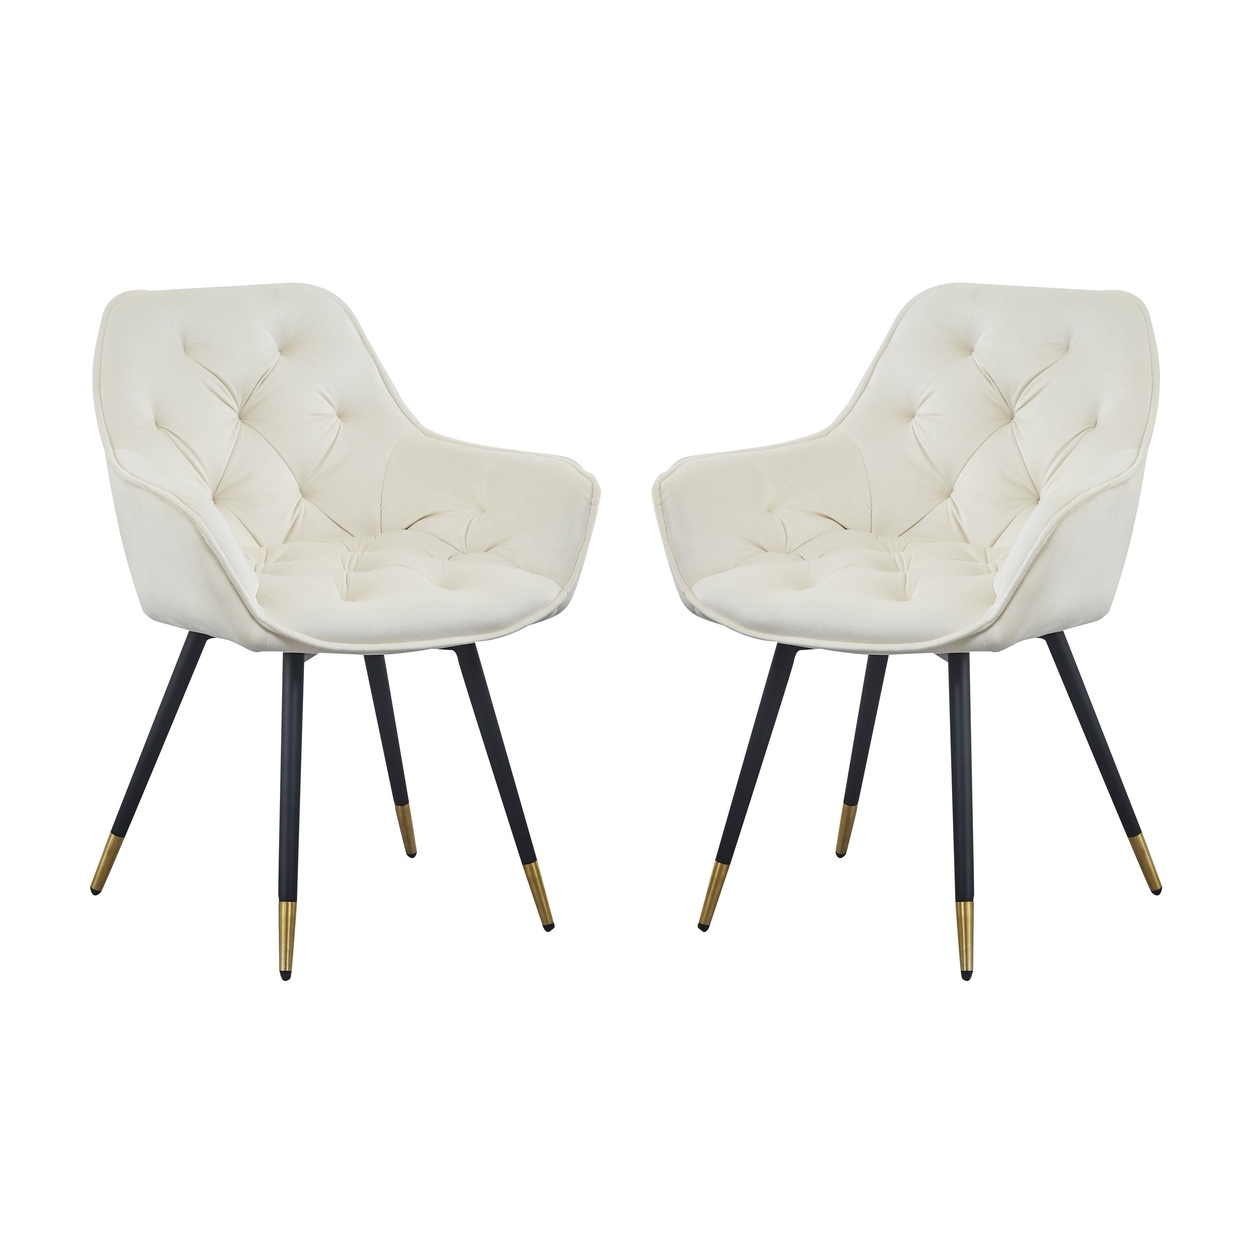 Alix 25 Inch Modern Dining Chair, Button Tufted, Set Of 2, White, Black- Saltoro Sherpi